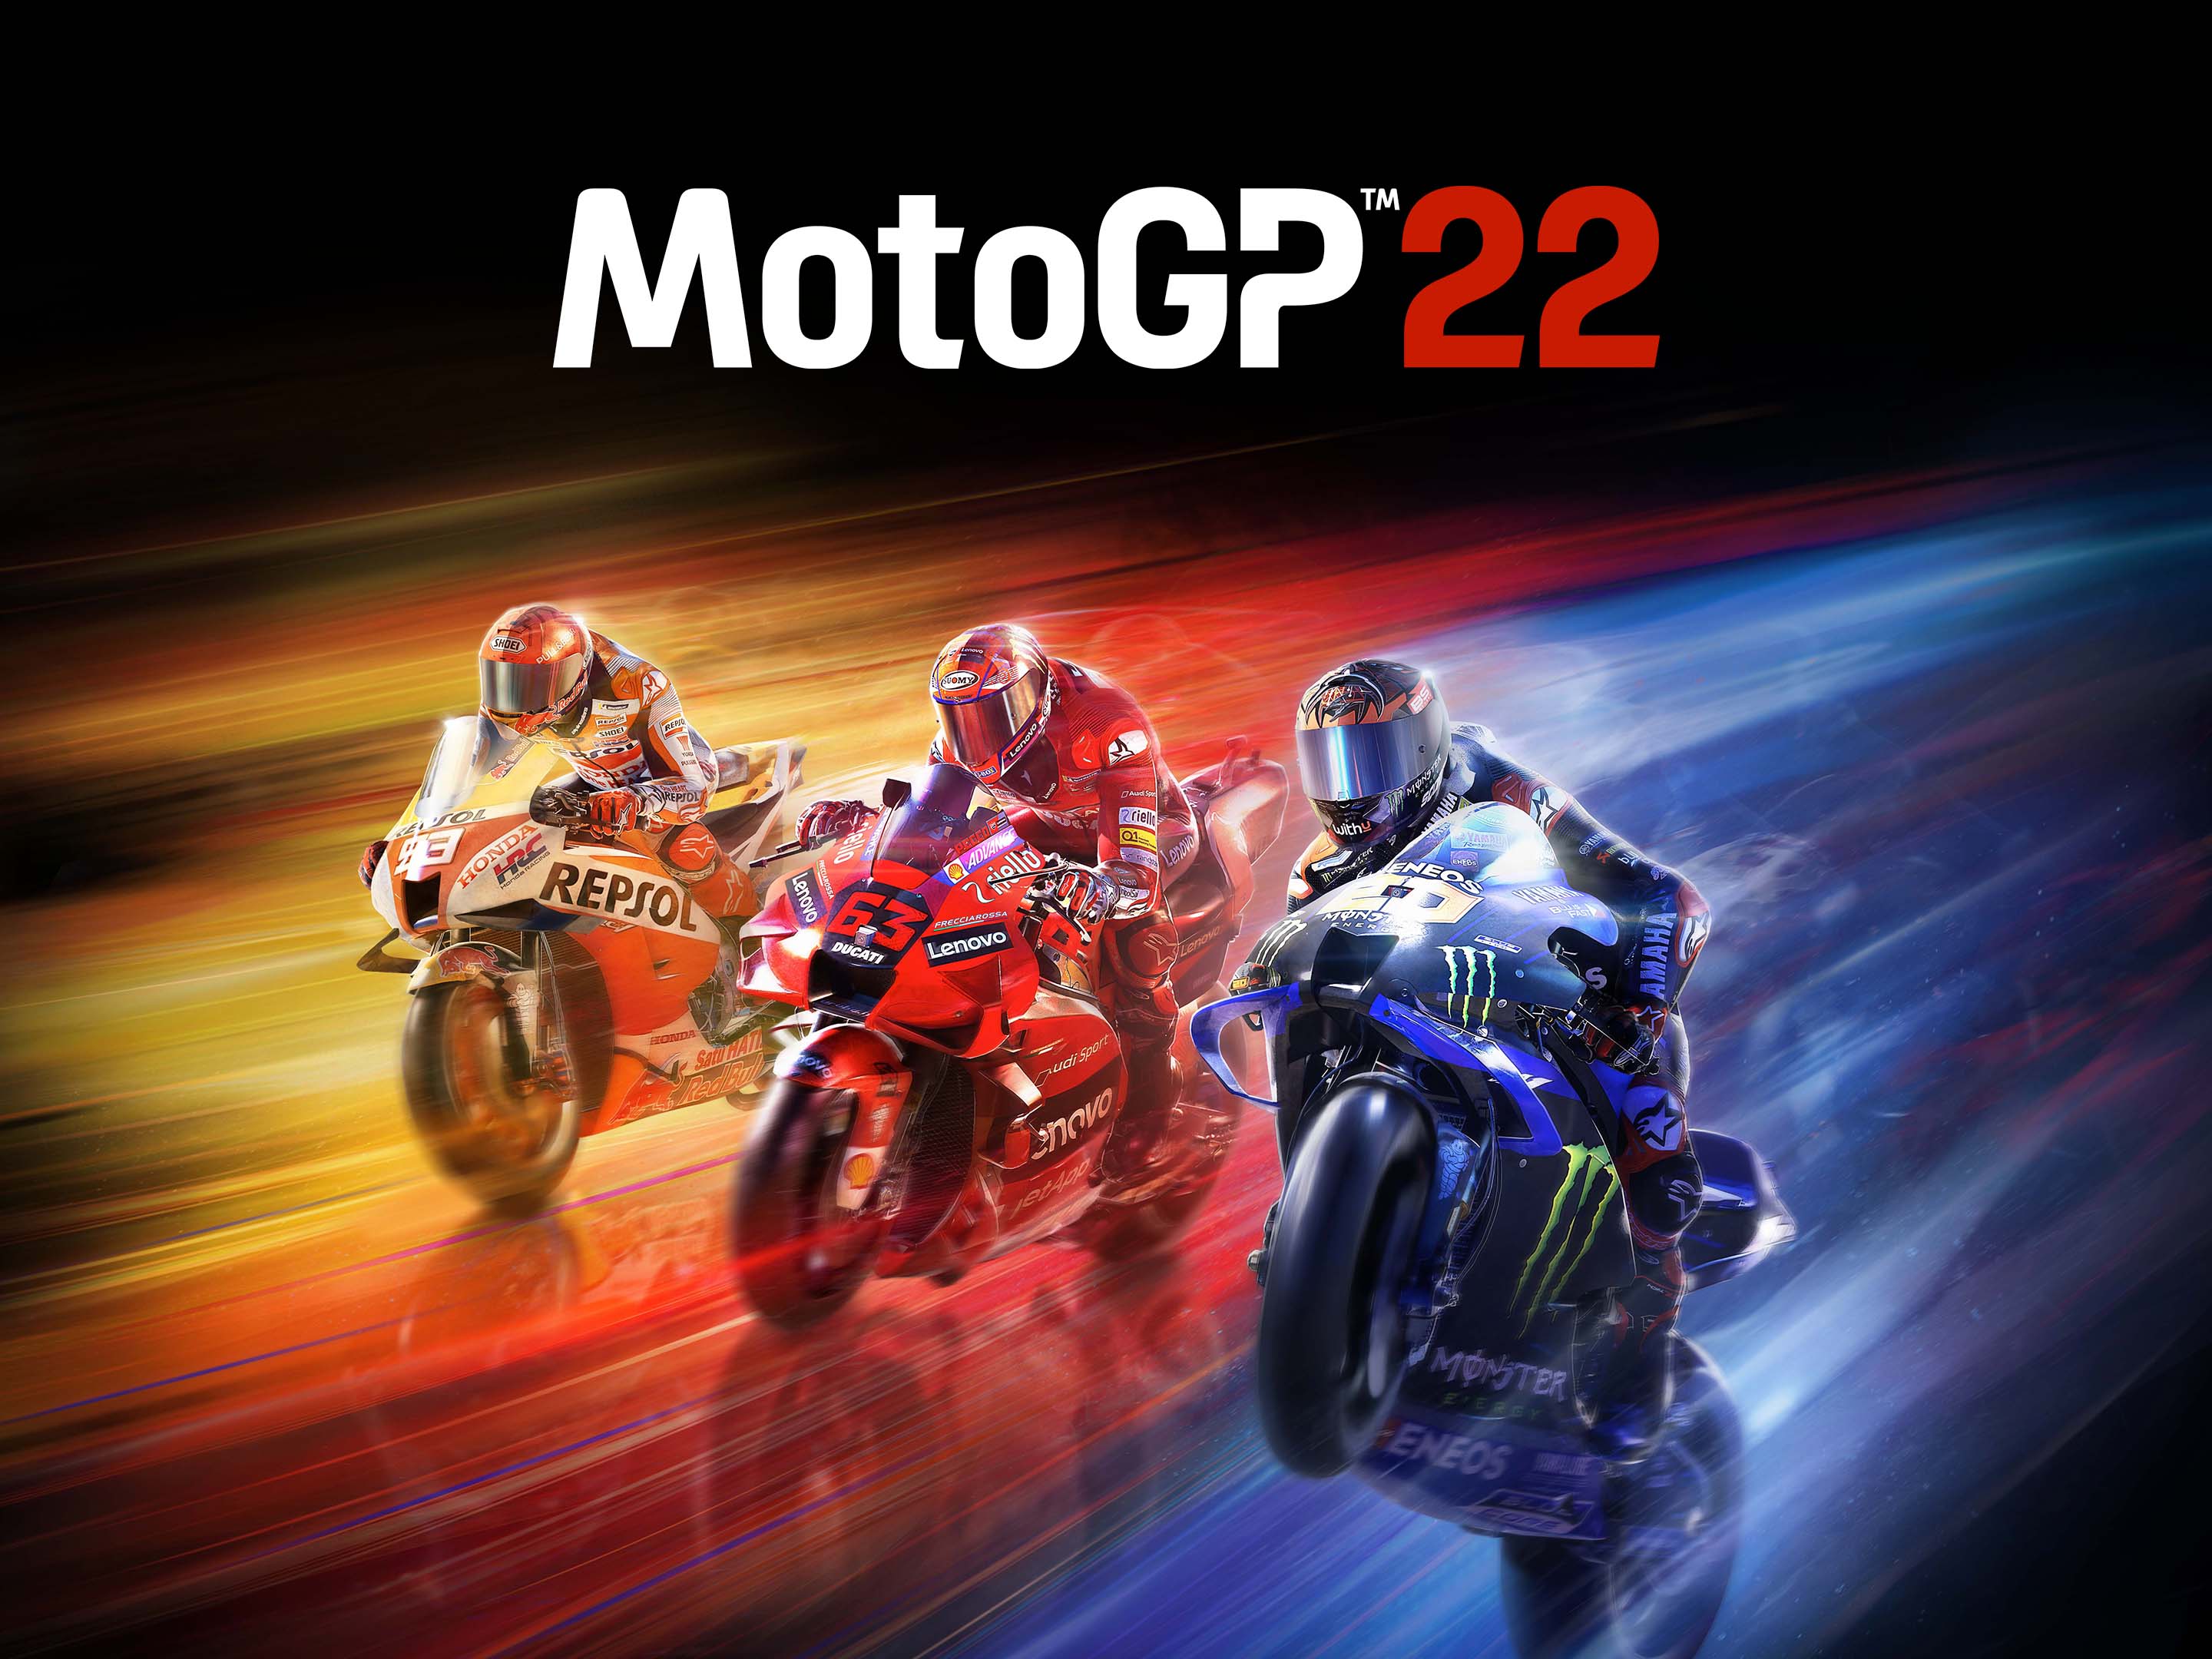 MotoGP 2009 full version download  Game download free, Motogp, Racing bikes